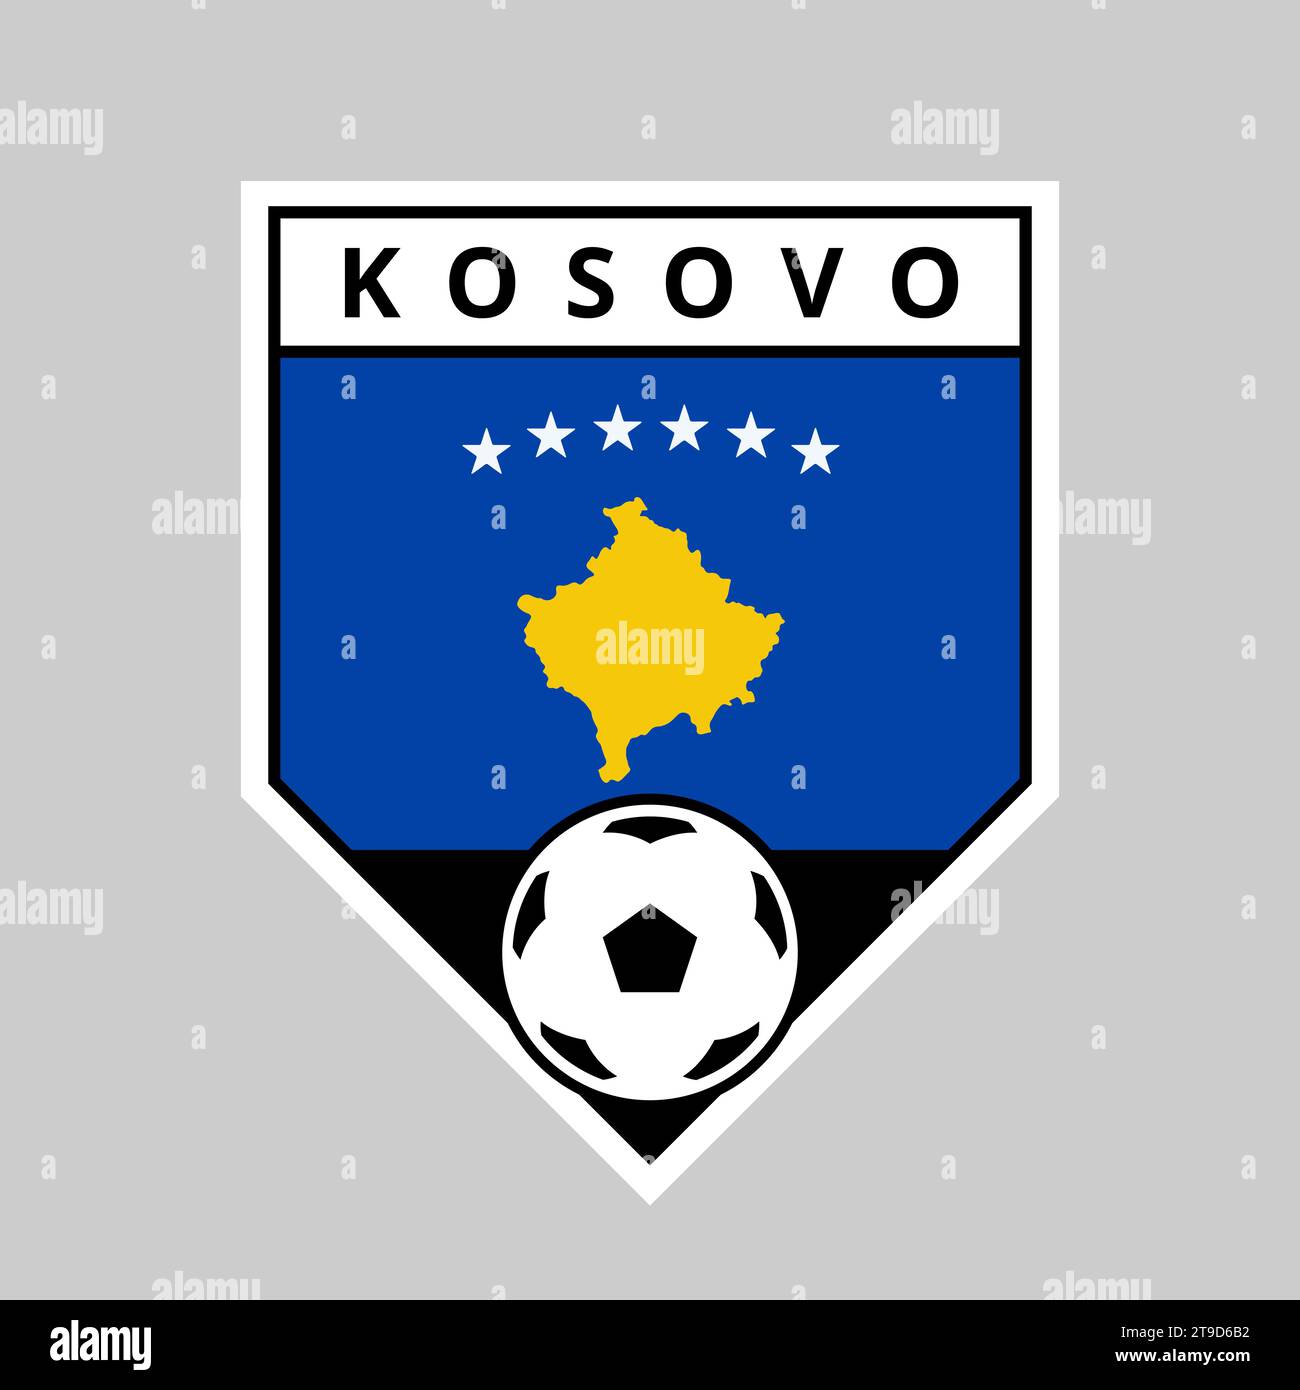 Illustration of Angled Shield Team Badge of Kosovo for Football Tournament Stock Vector